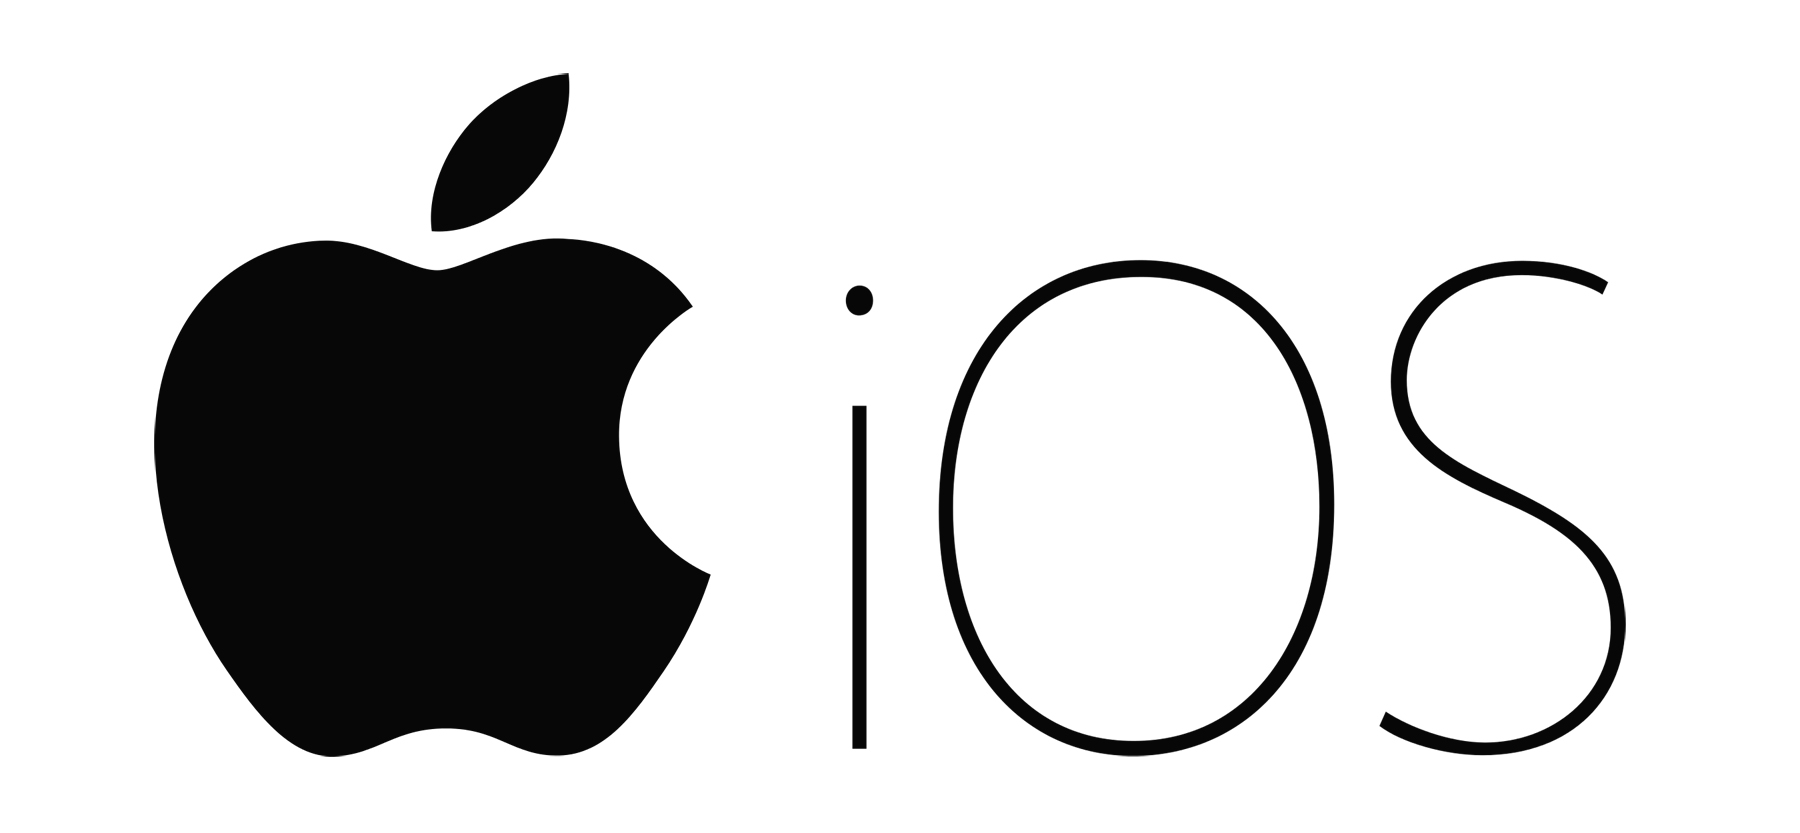 Download Ios Logos